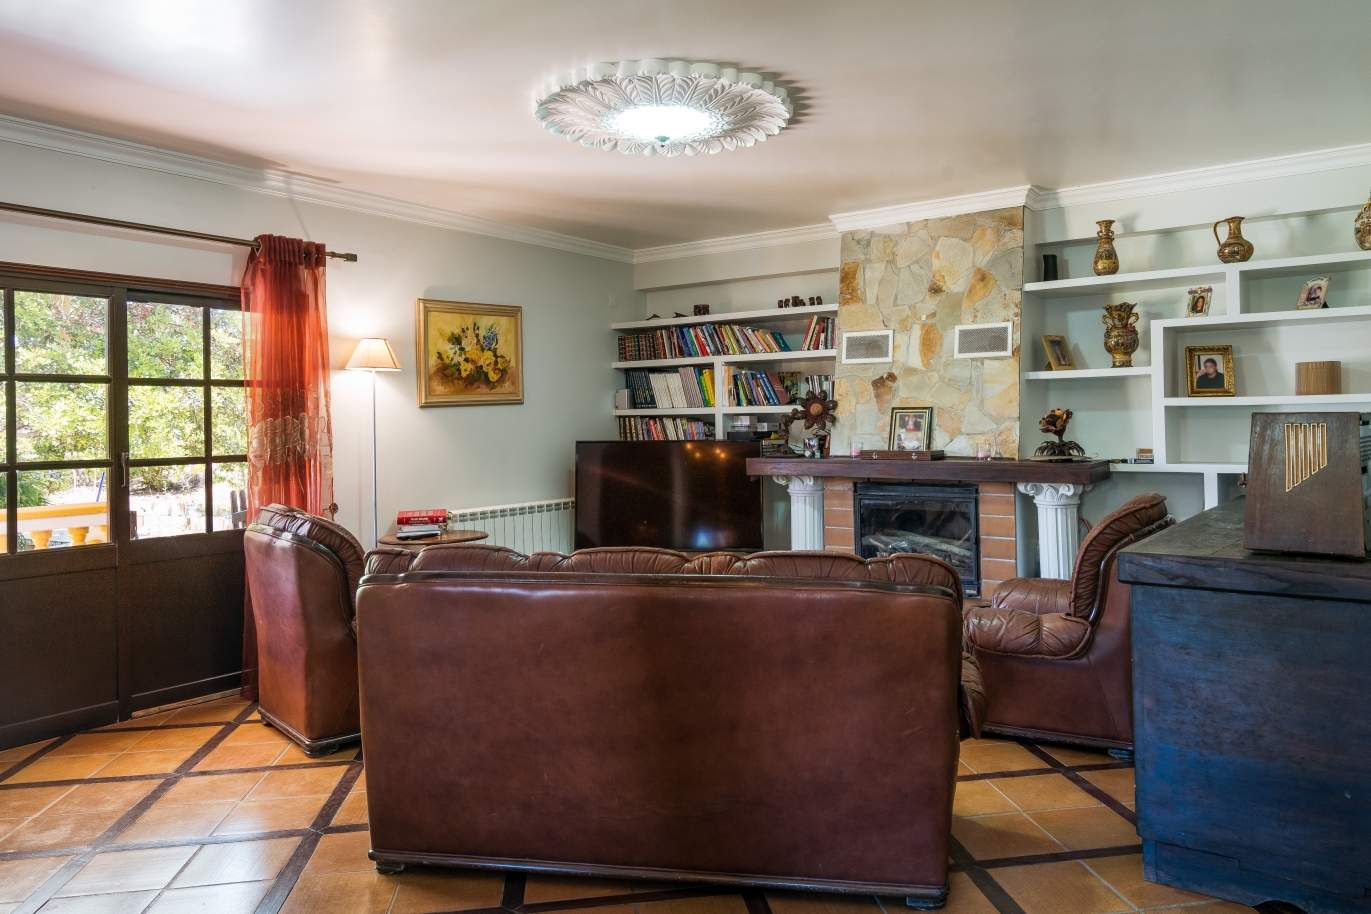 4 Bedroom Villa with plot of land, sale, Albufeira, Algarve, Portugal_143755